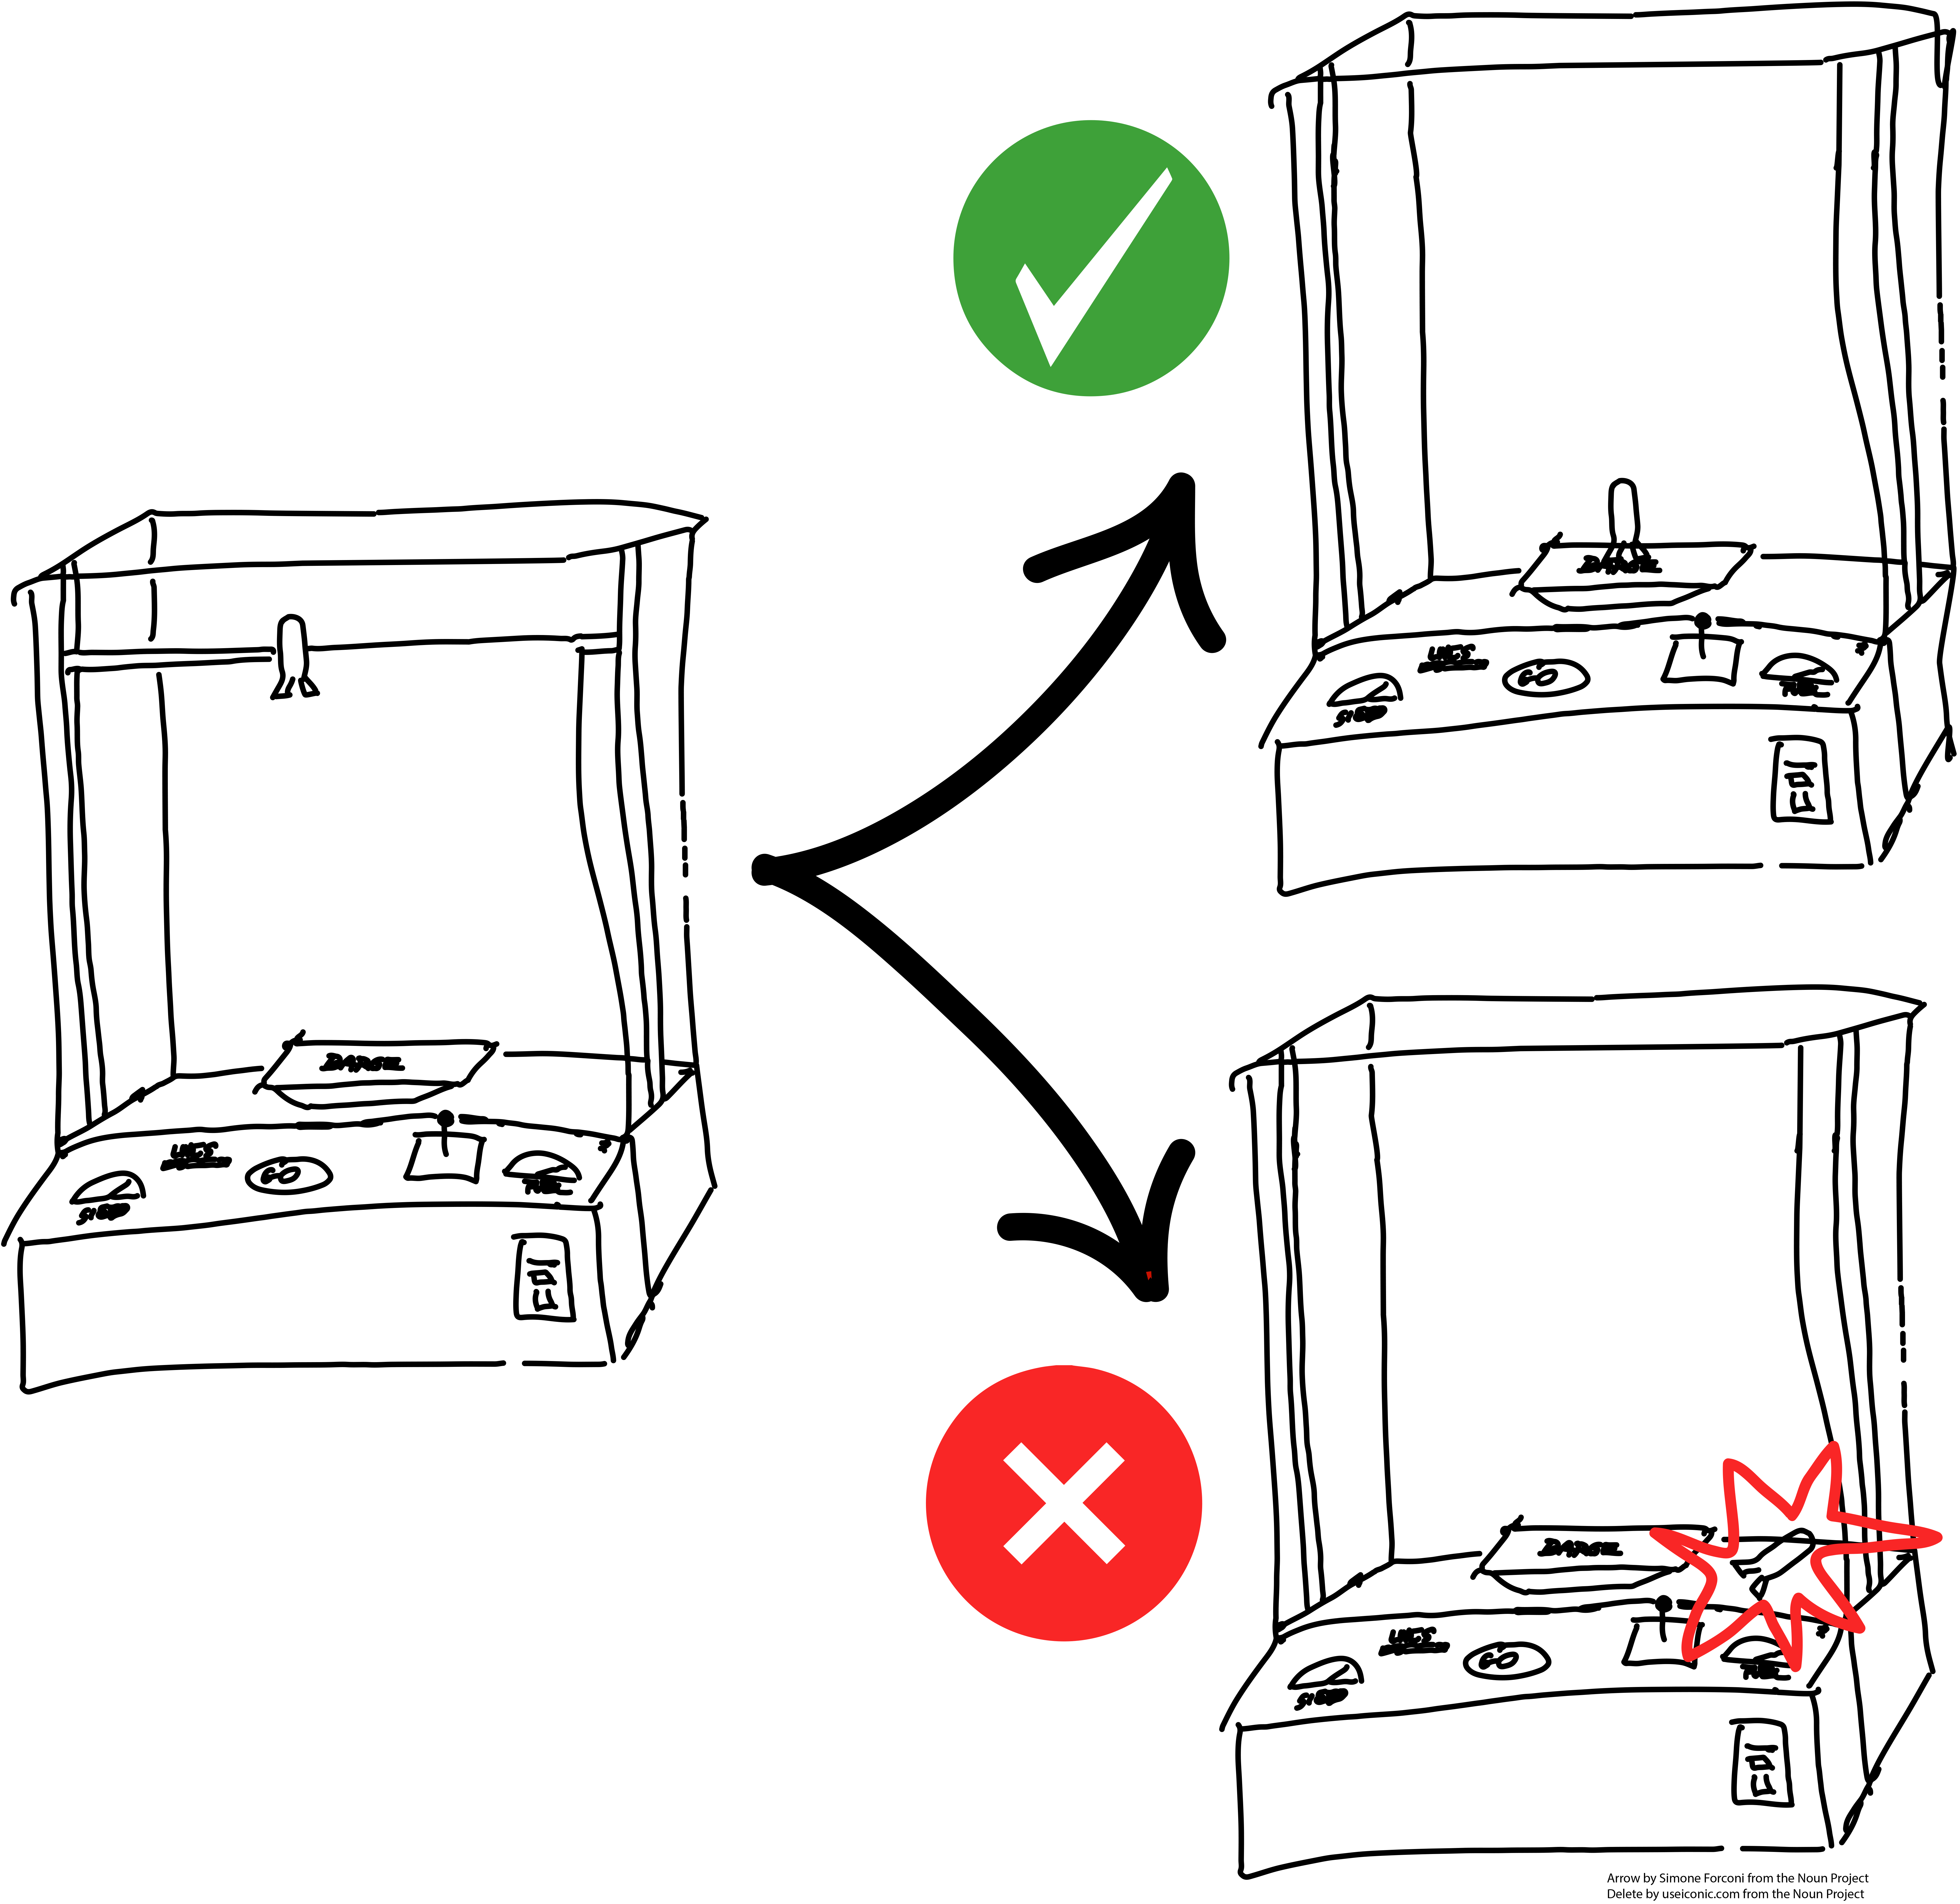 High-level SO:X interaction diagram